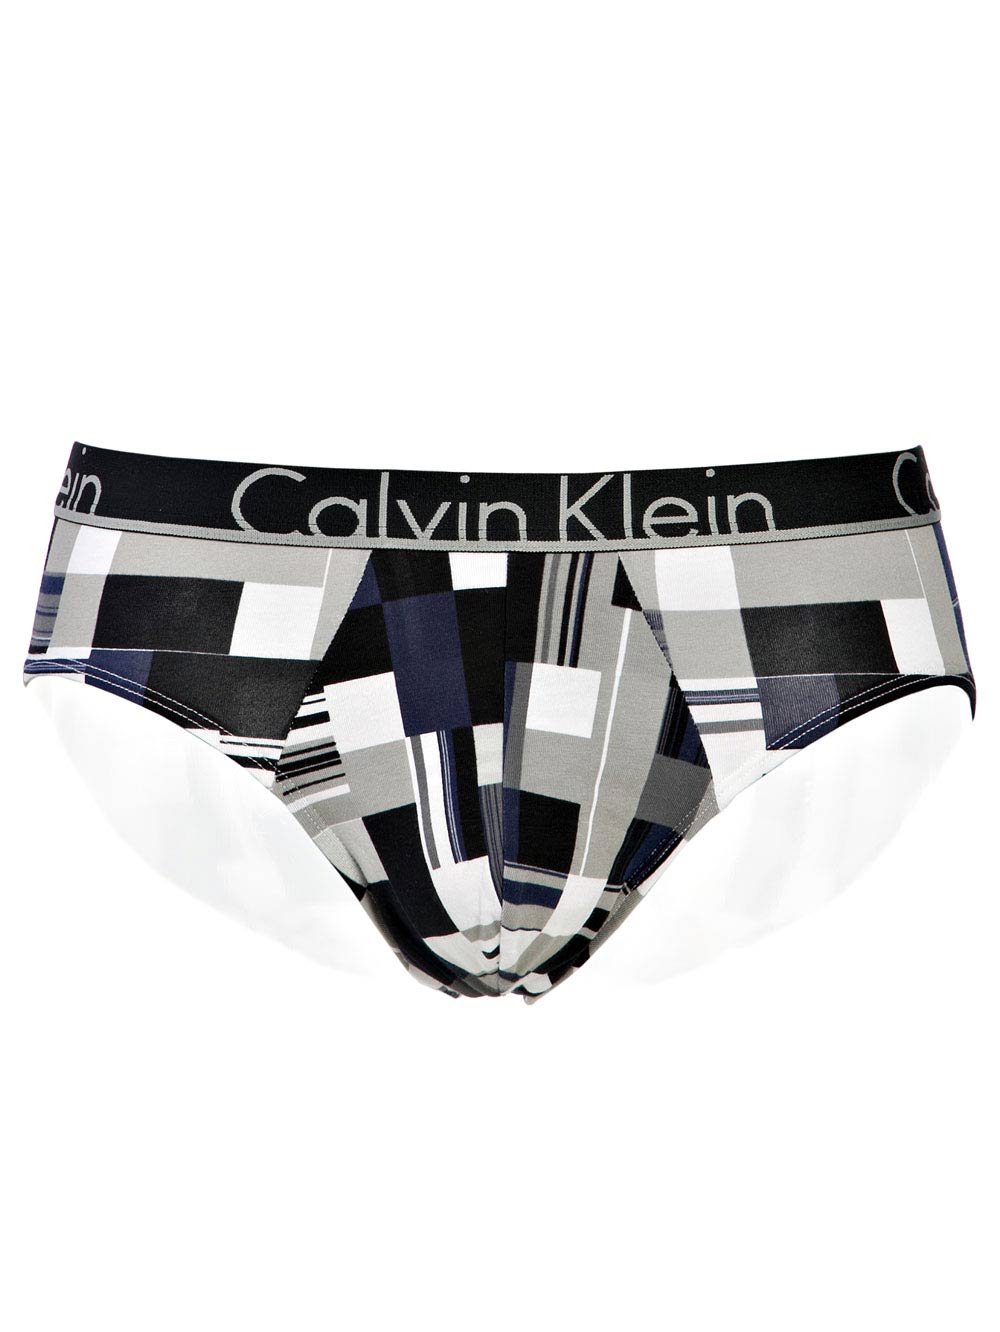 Slip Uomo Calvin Klein Grigio con Stampa Graphic | Albos Underwear - Shop  Online Intimo